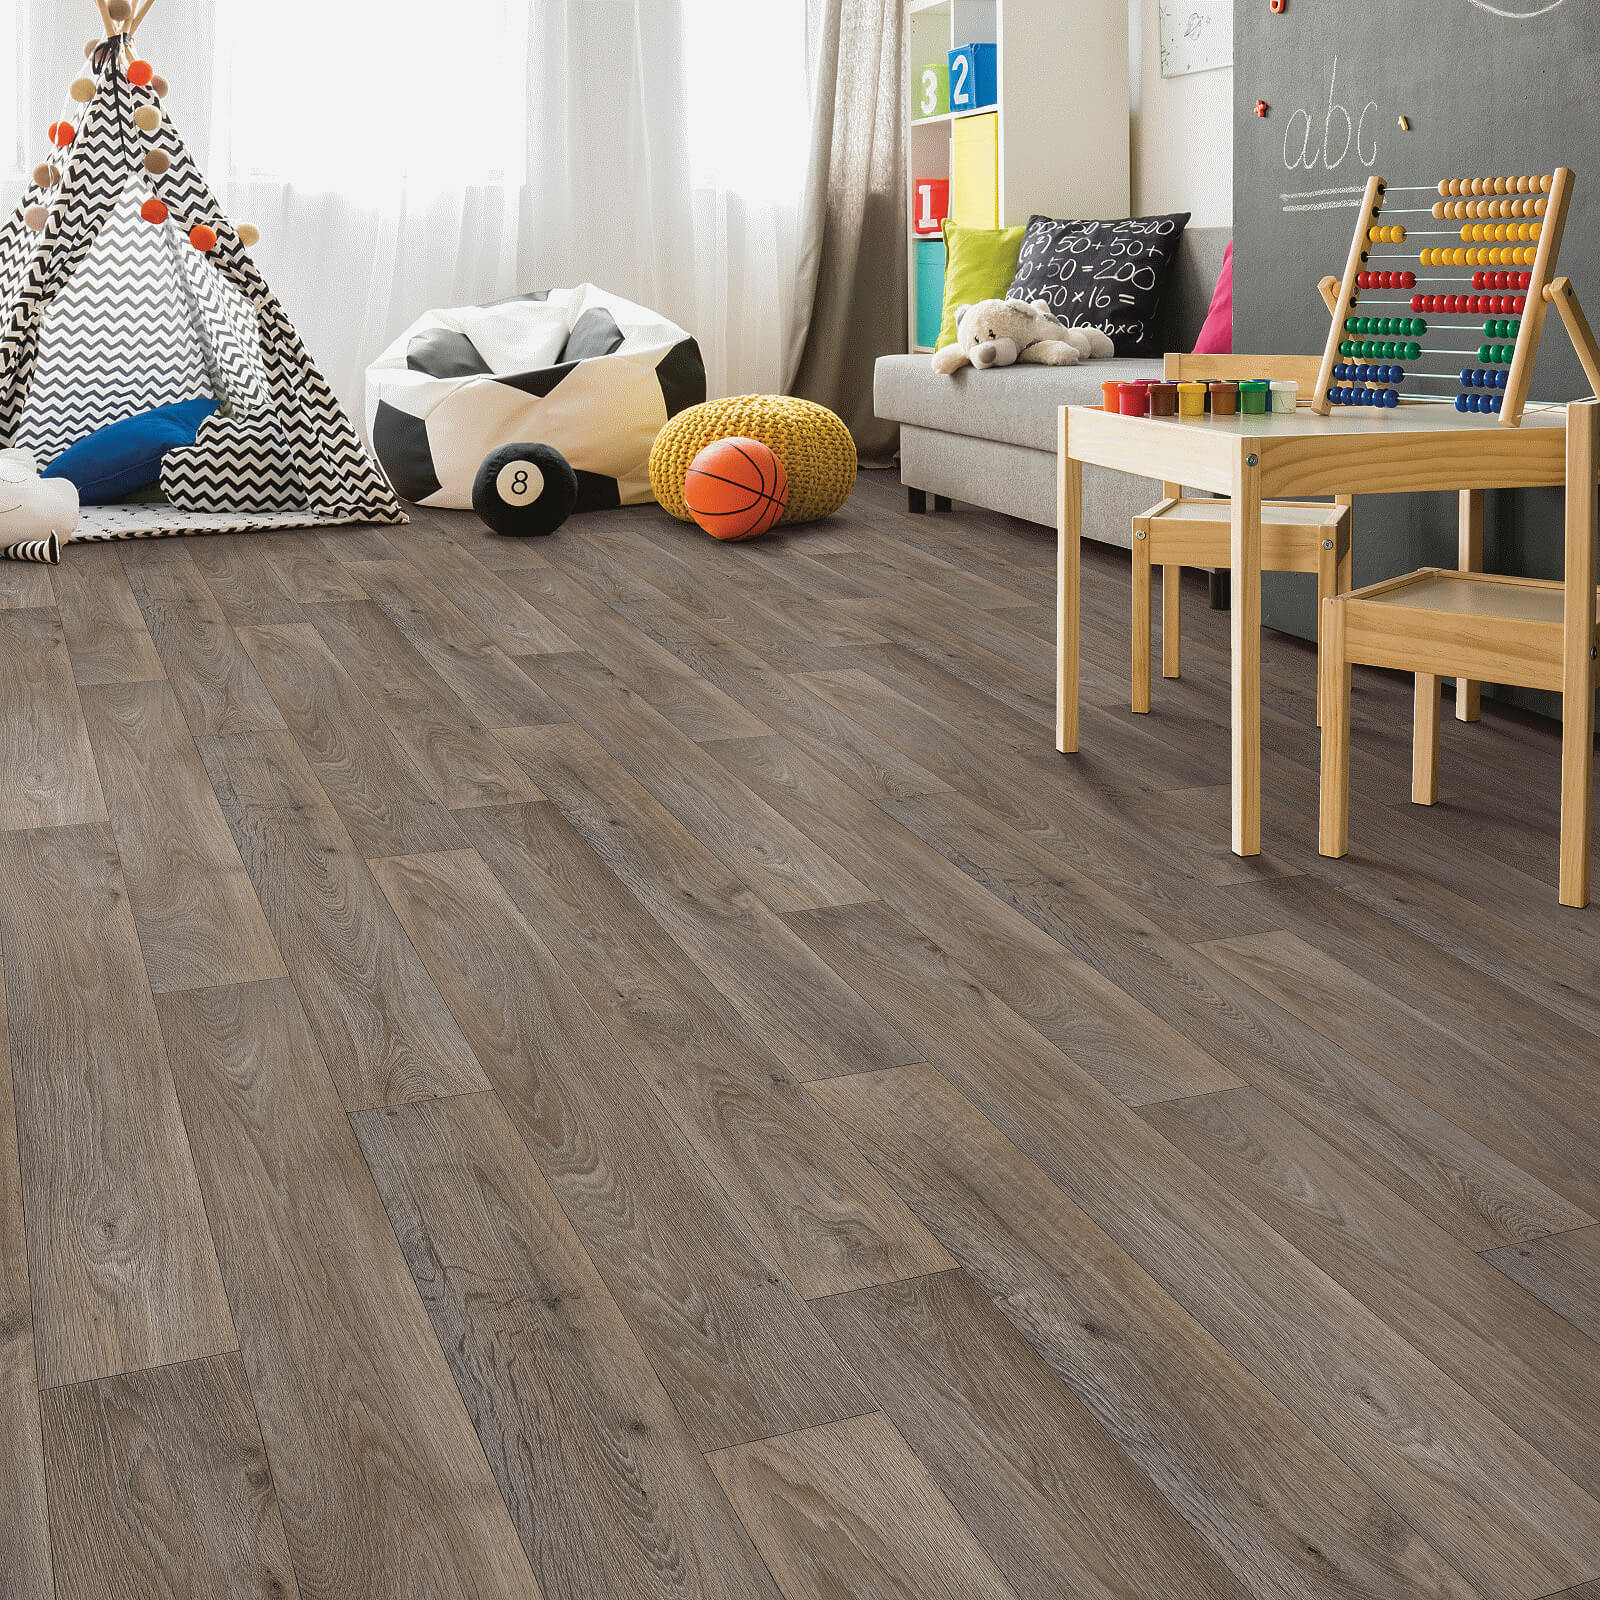 Kid-friendly vinyl plank flooring | Dehart Tile